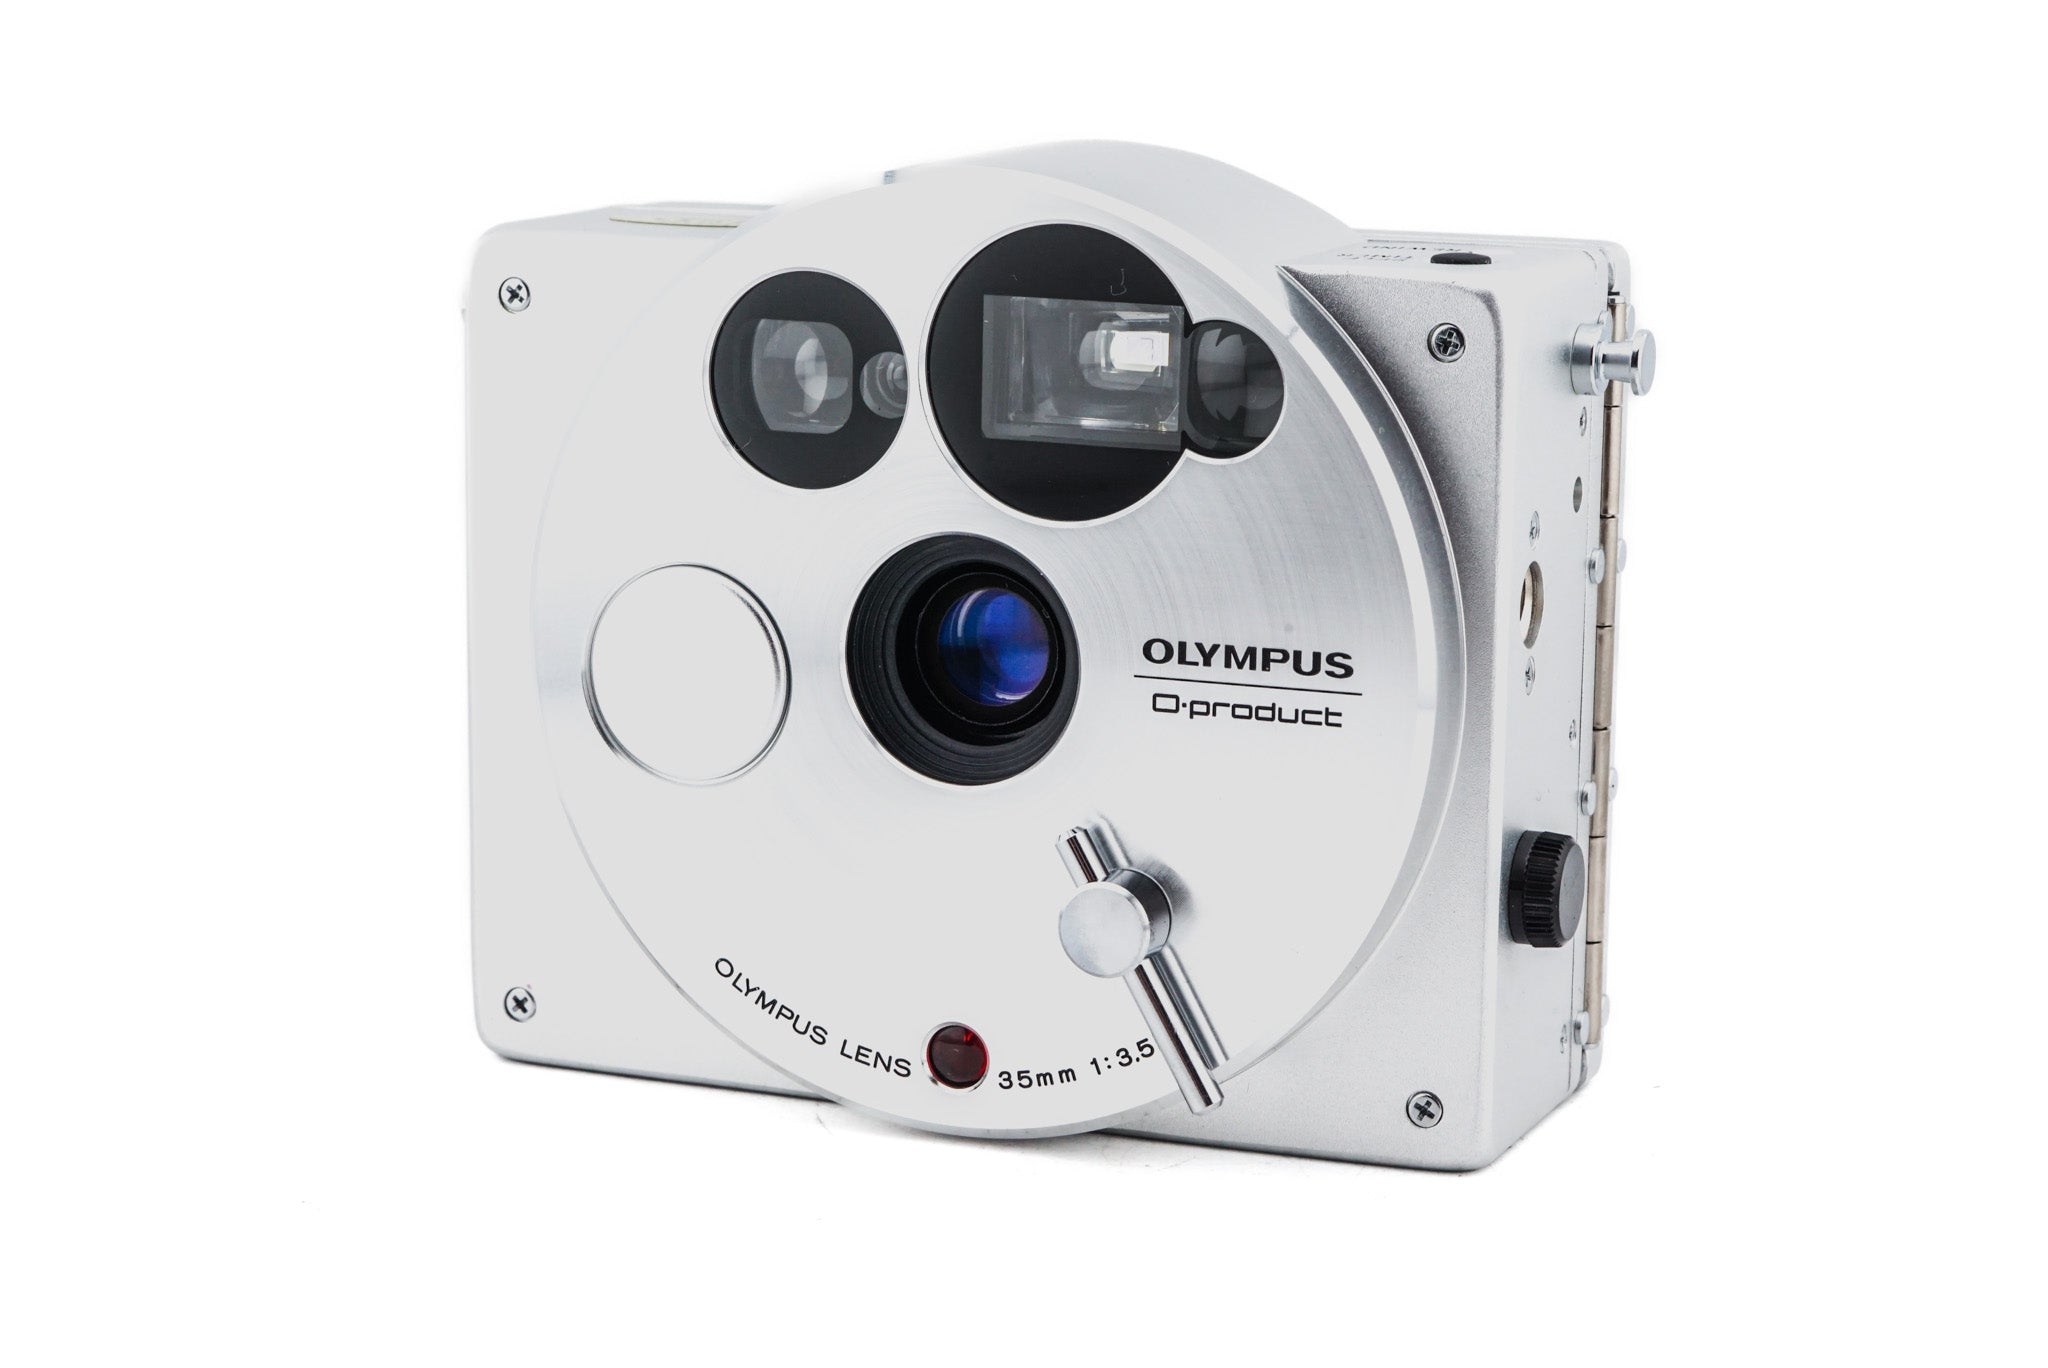 Olympus O-Product - Camera